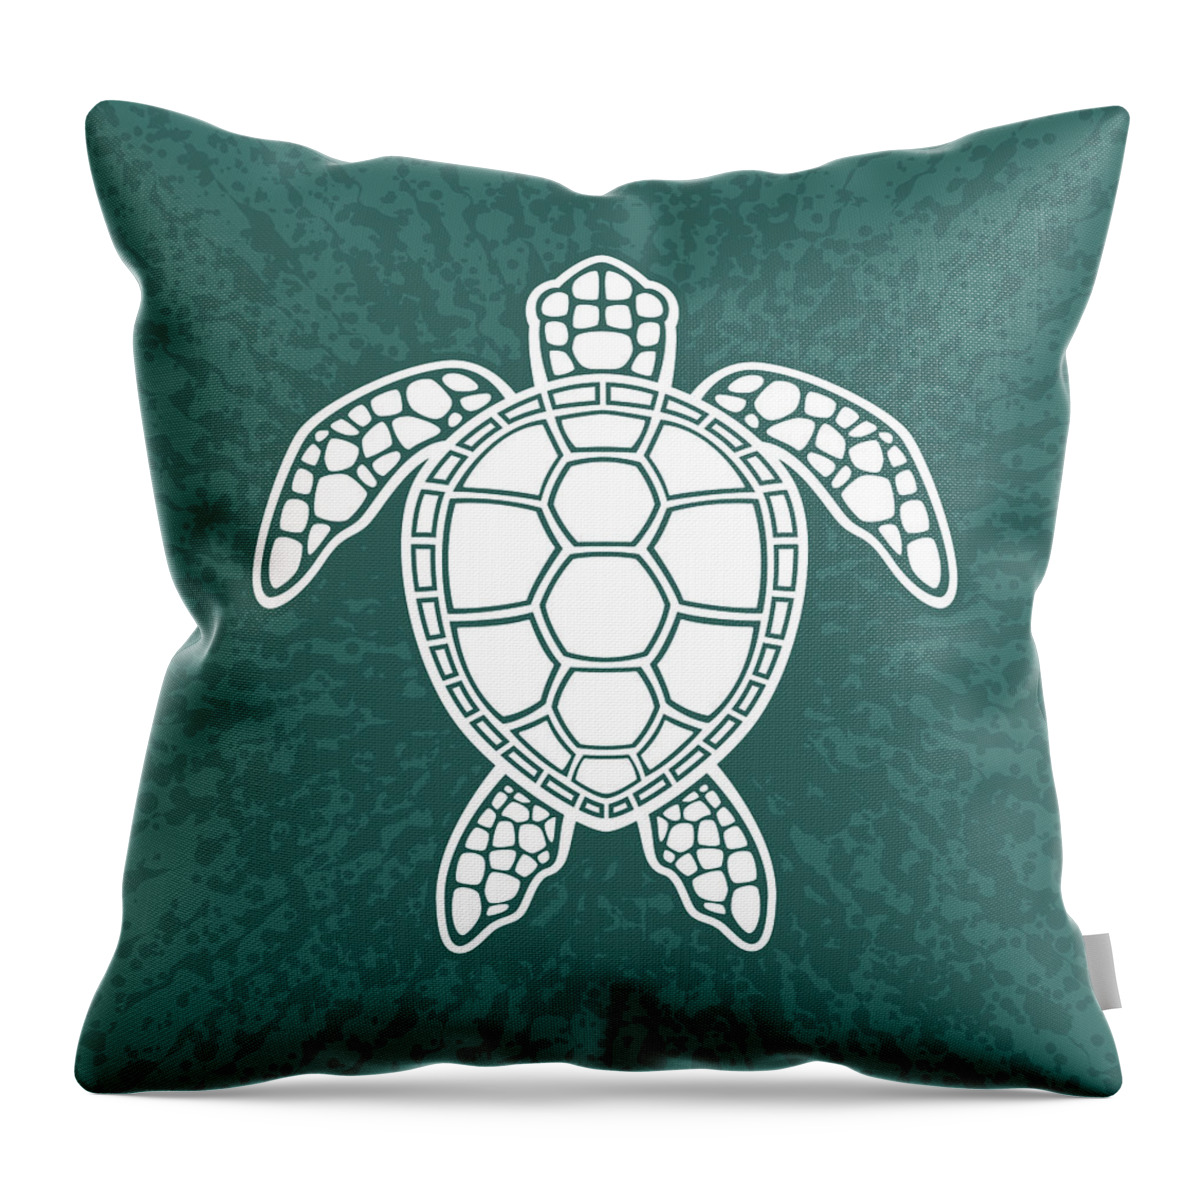 Green Throw Pillow featuring the digital art Green Sea Turtle Design - White by John Schwegel